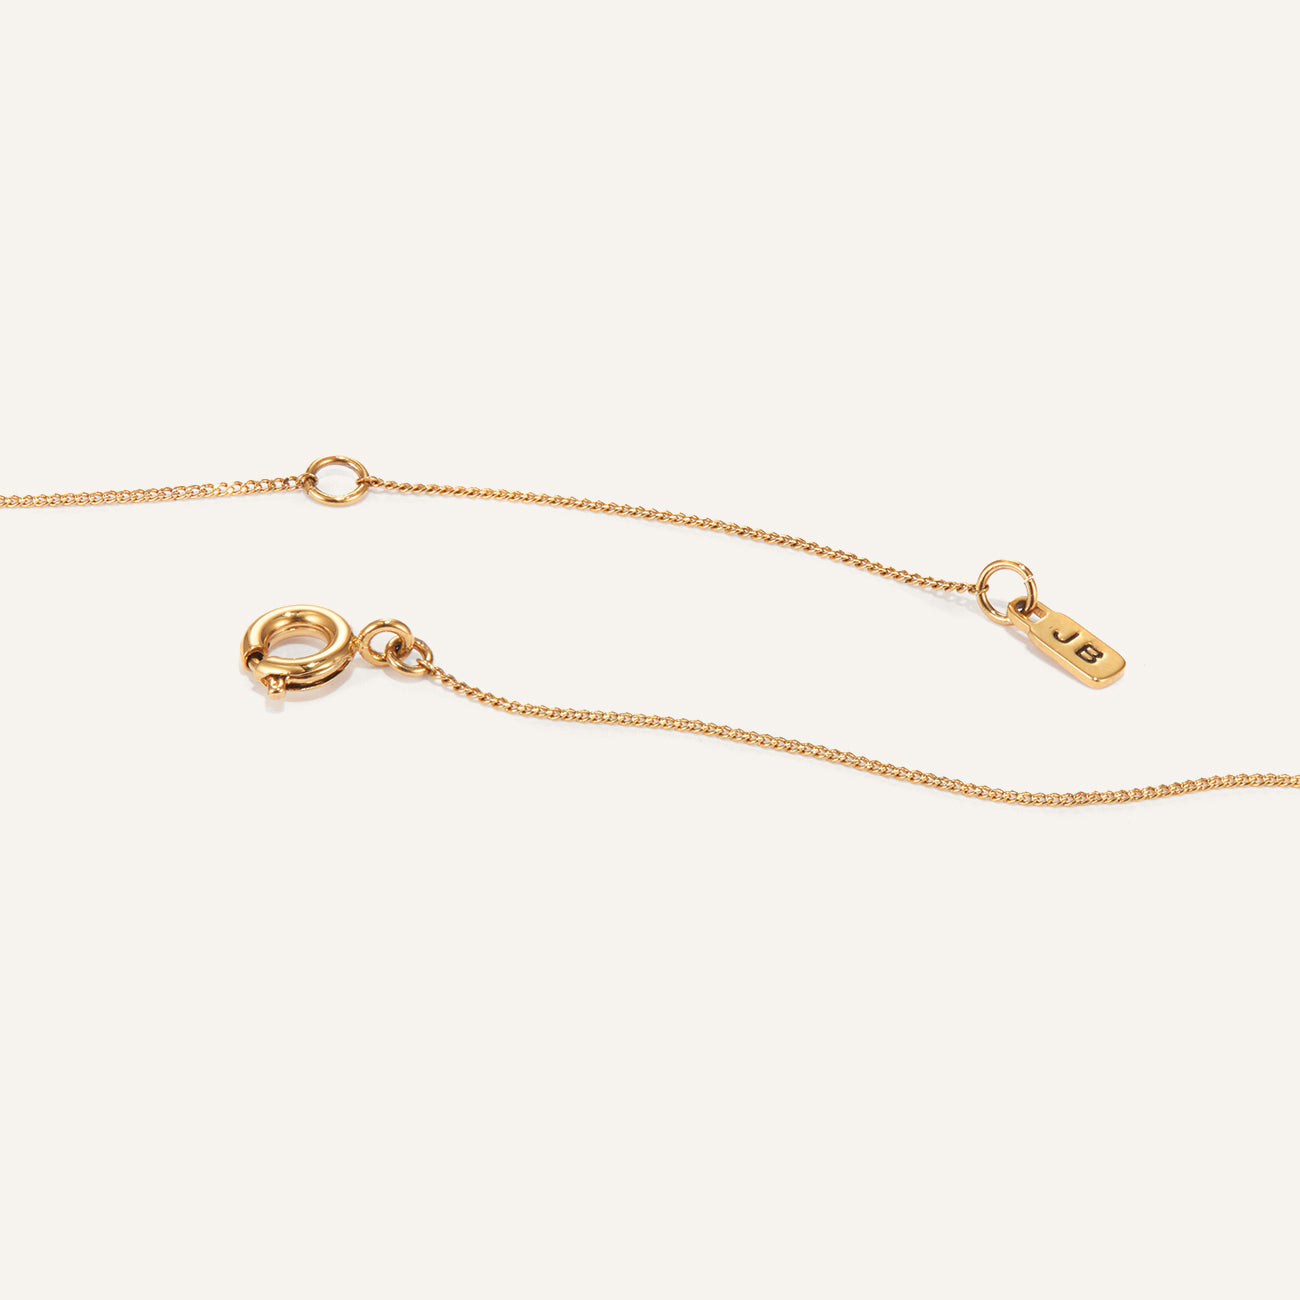 14k Gold Plated Monogram Necklace - Z